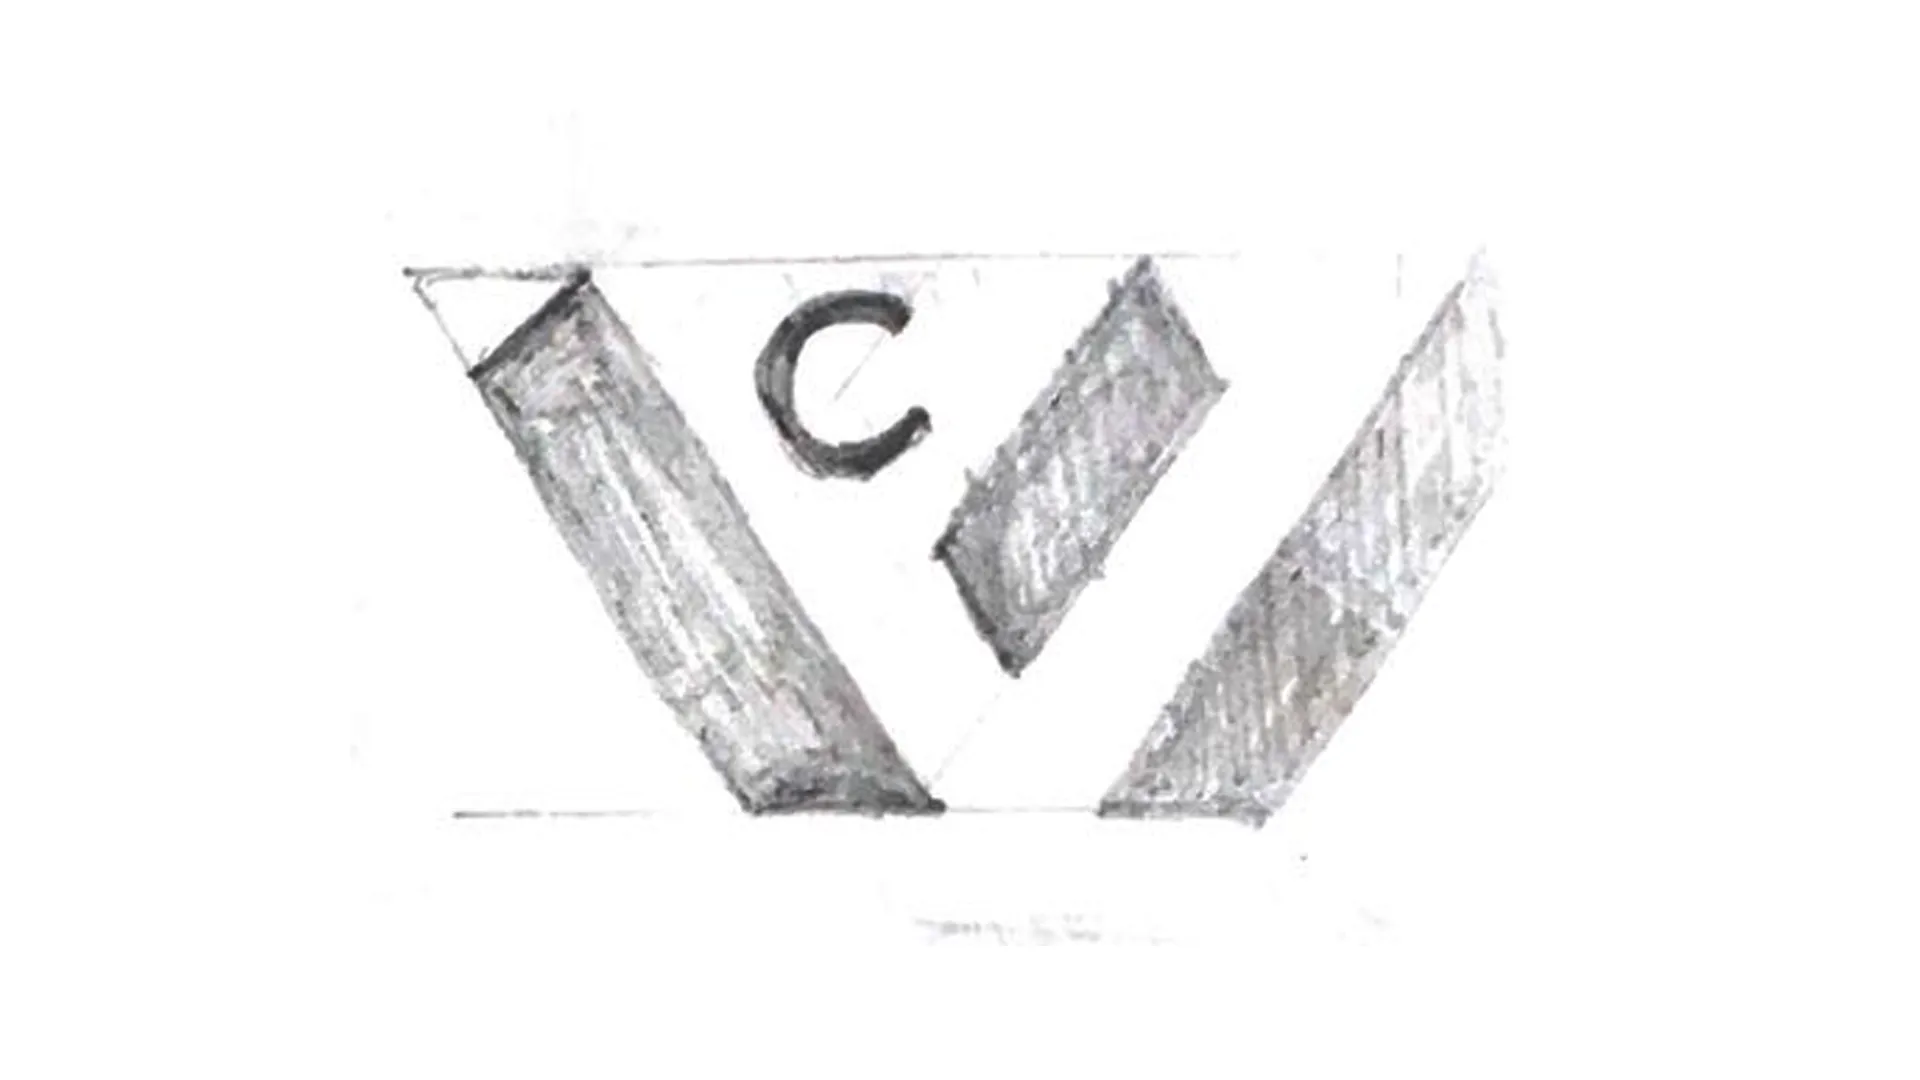 Sketches: Work in progress, behind the Wellington Calisthenics logomark